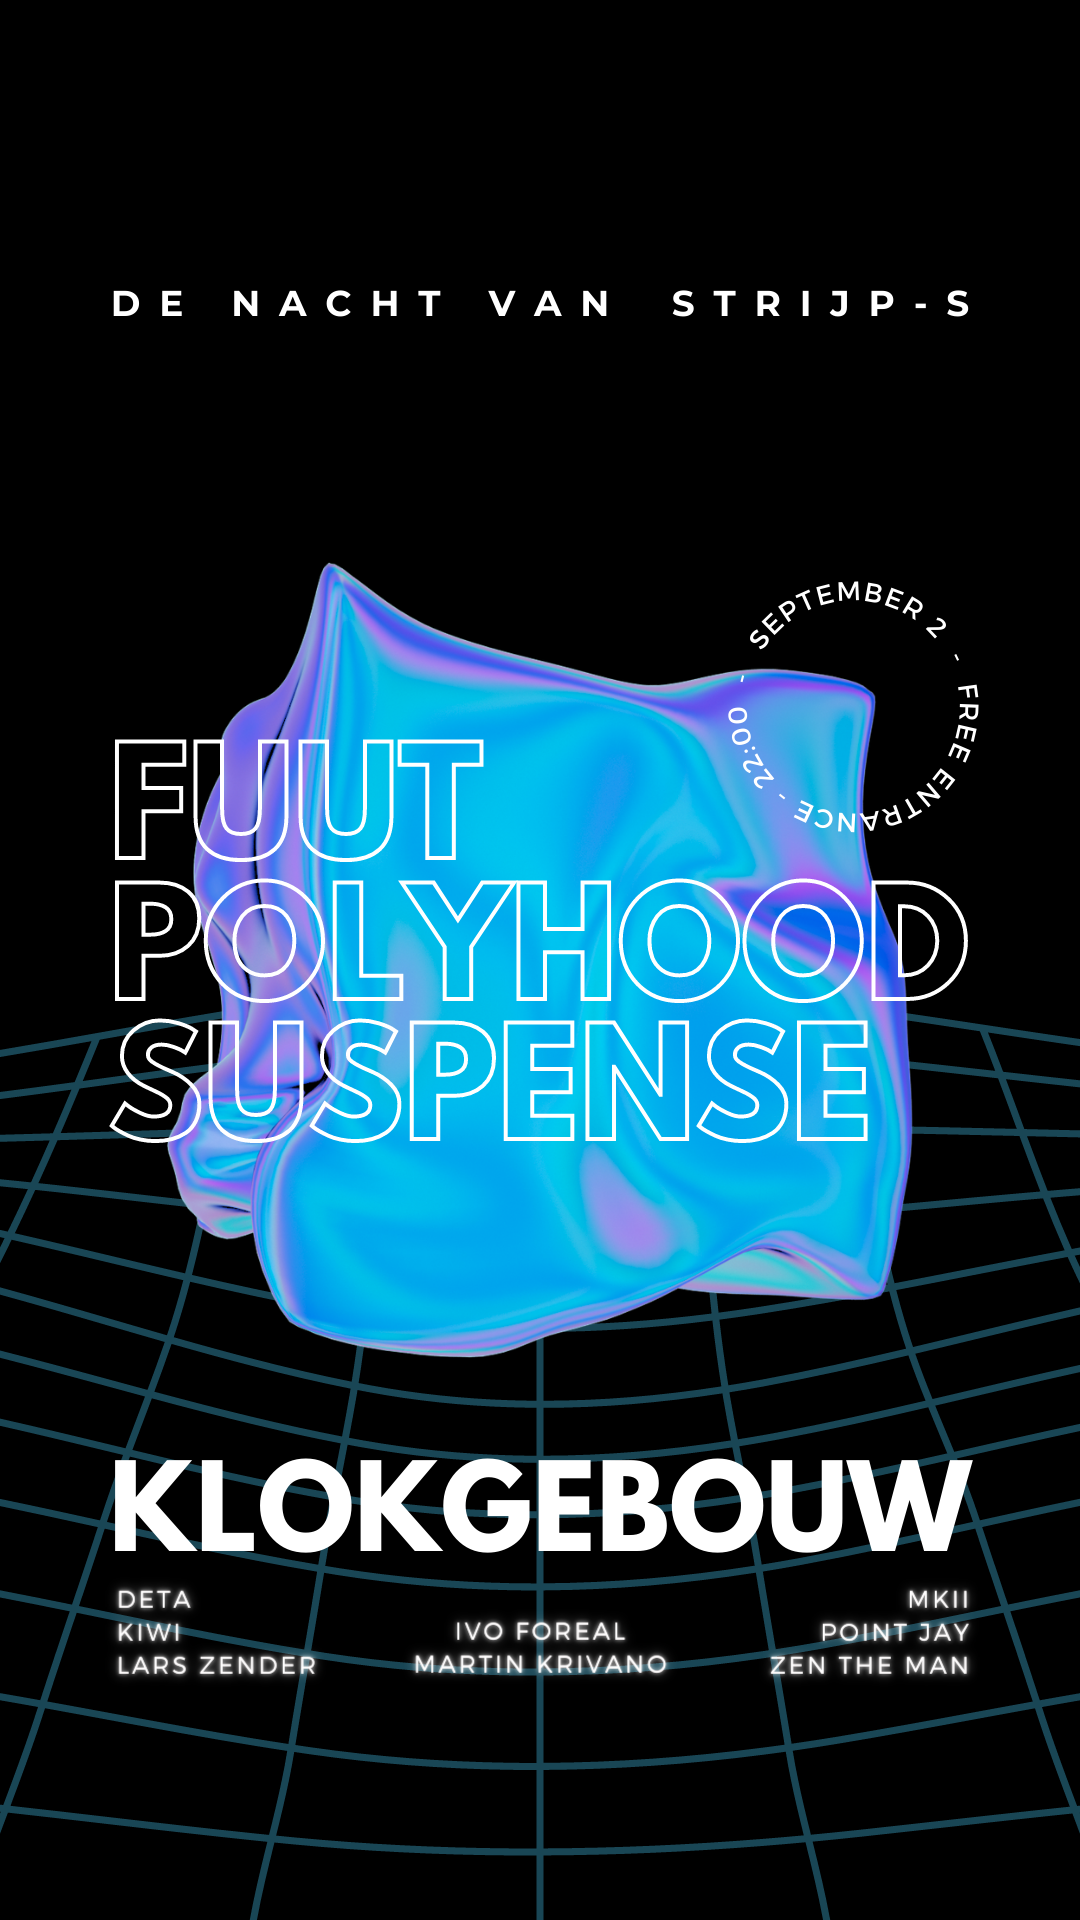 Fuut x Polyhood x Suspense - フライヤー表